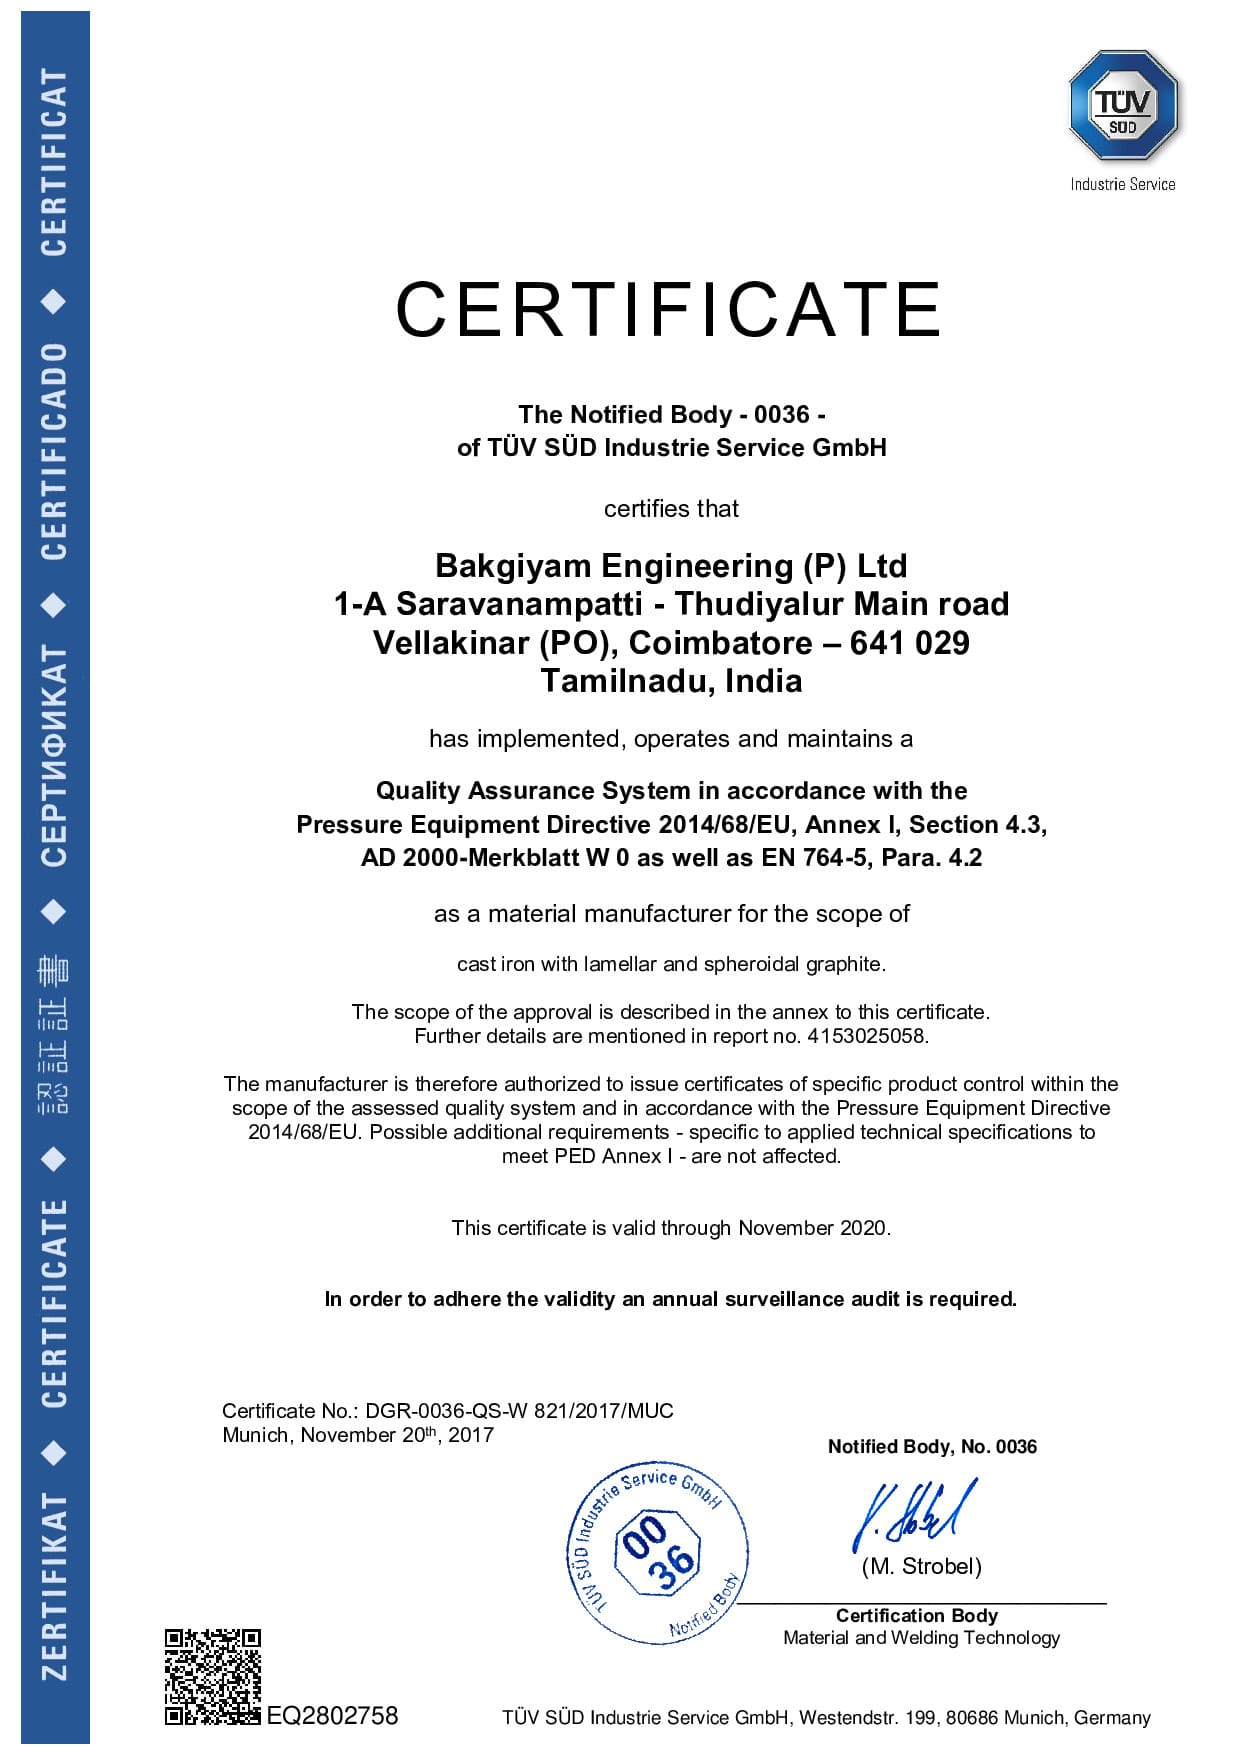 Cast Iron Foundry Certificate - Bakgiyam Engineering